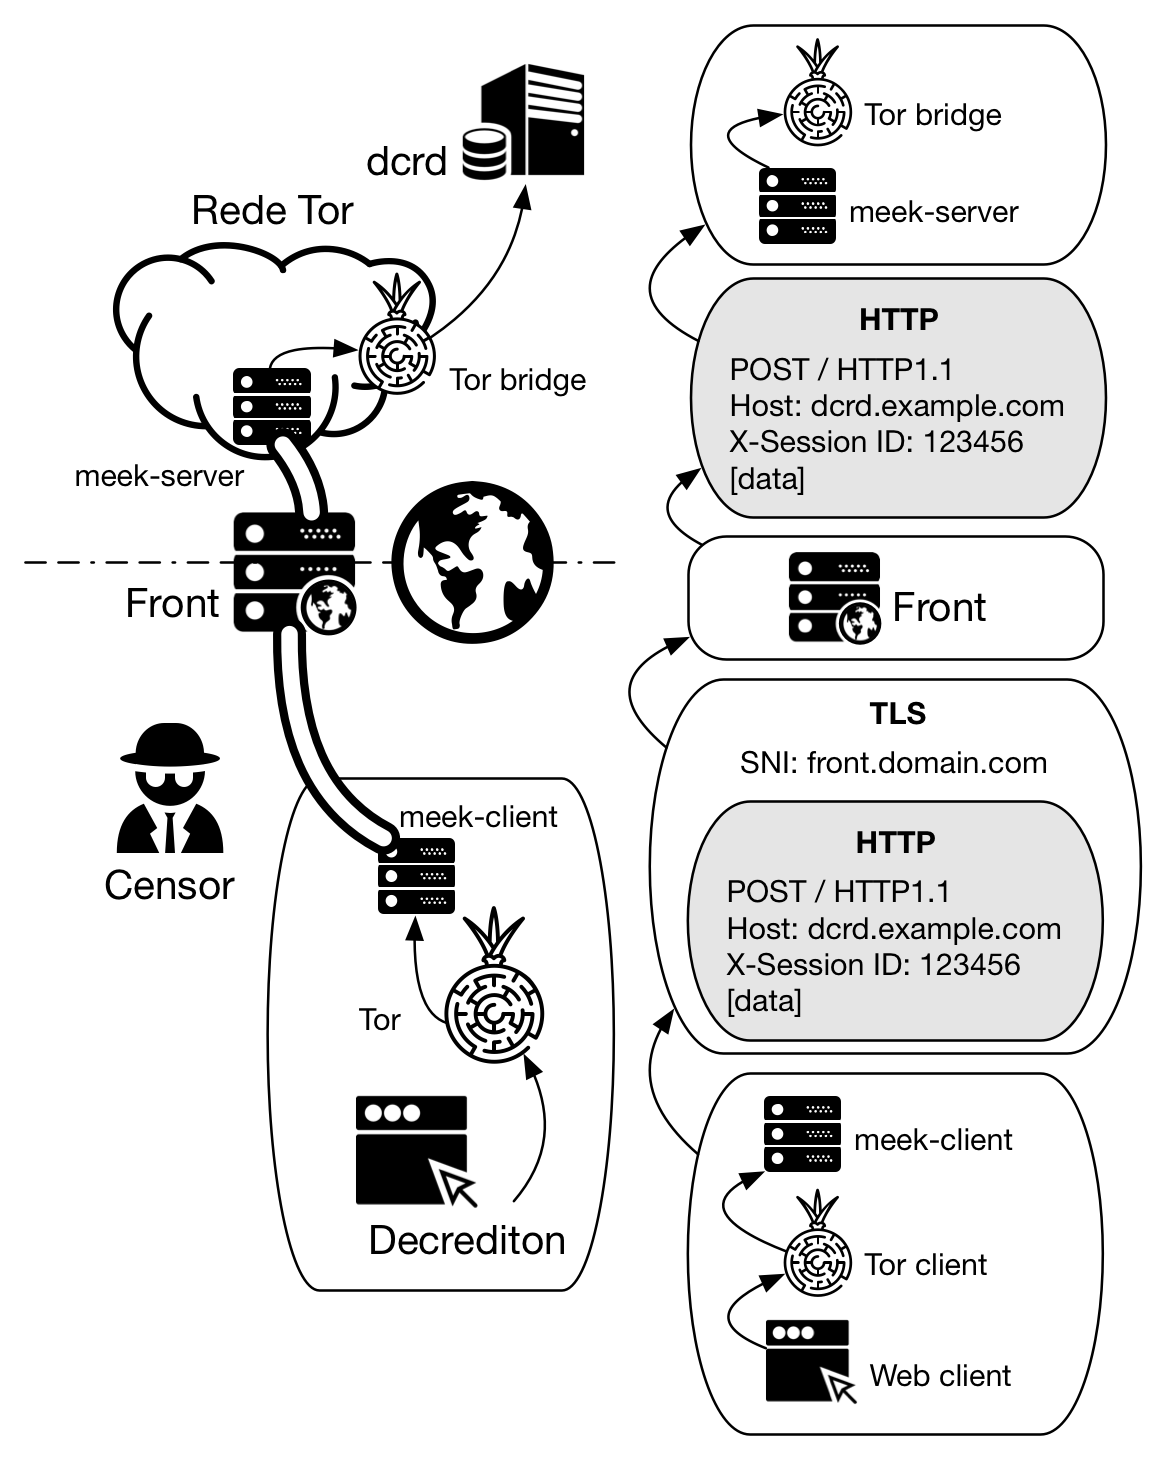 Figure 3 - TLS encapsulation made by meek